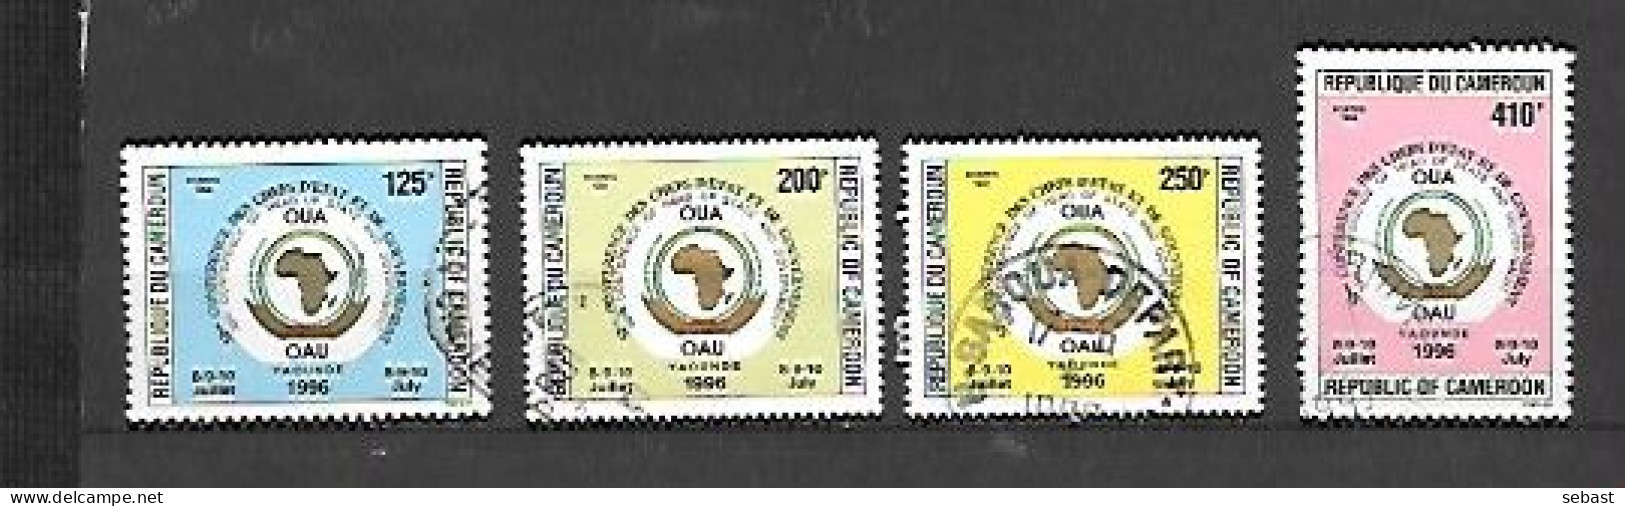 TIMBRE OBLITERE DU CAMEROUN DE 1996 N° MICHEL 1221/24 - Cameroon (1960-...)